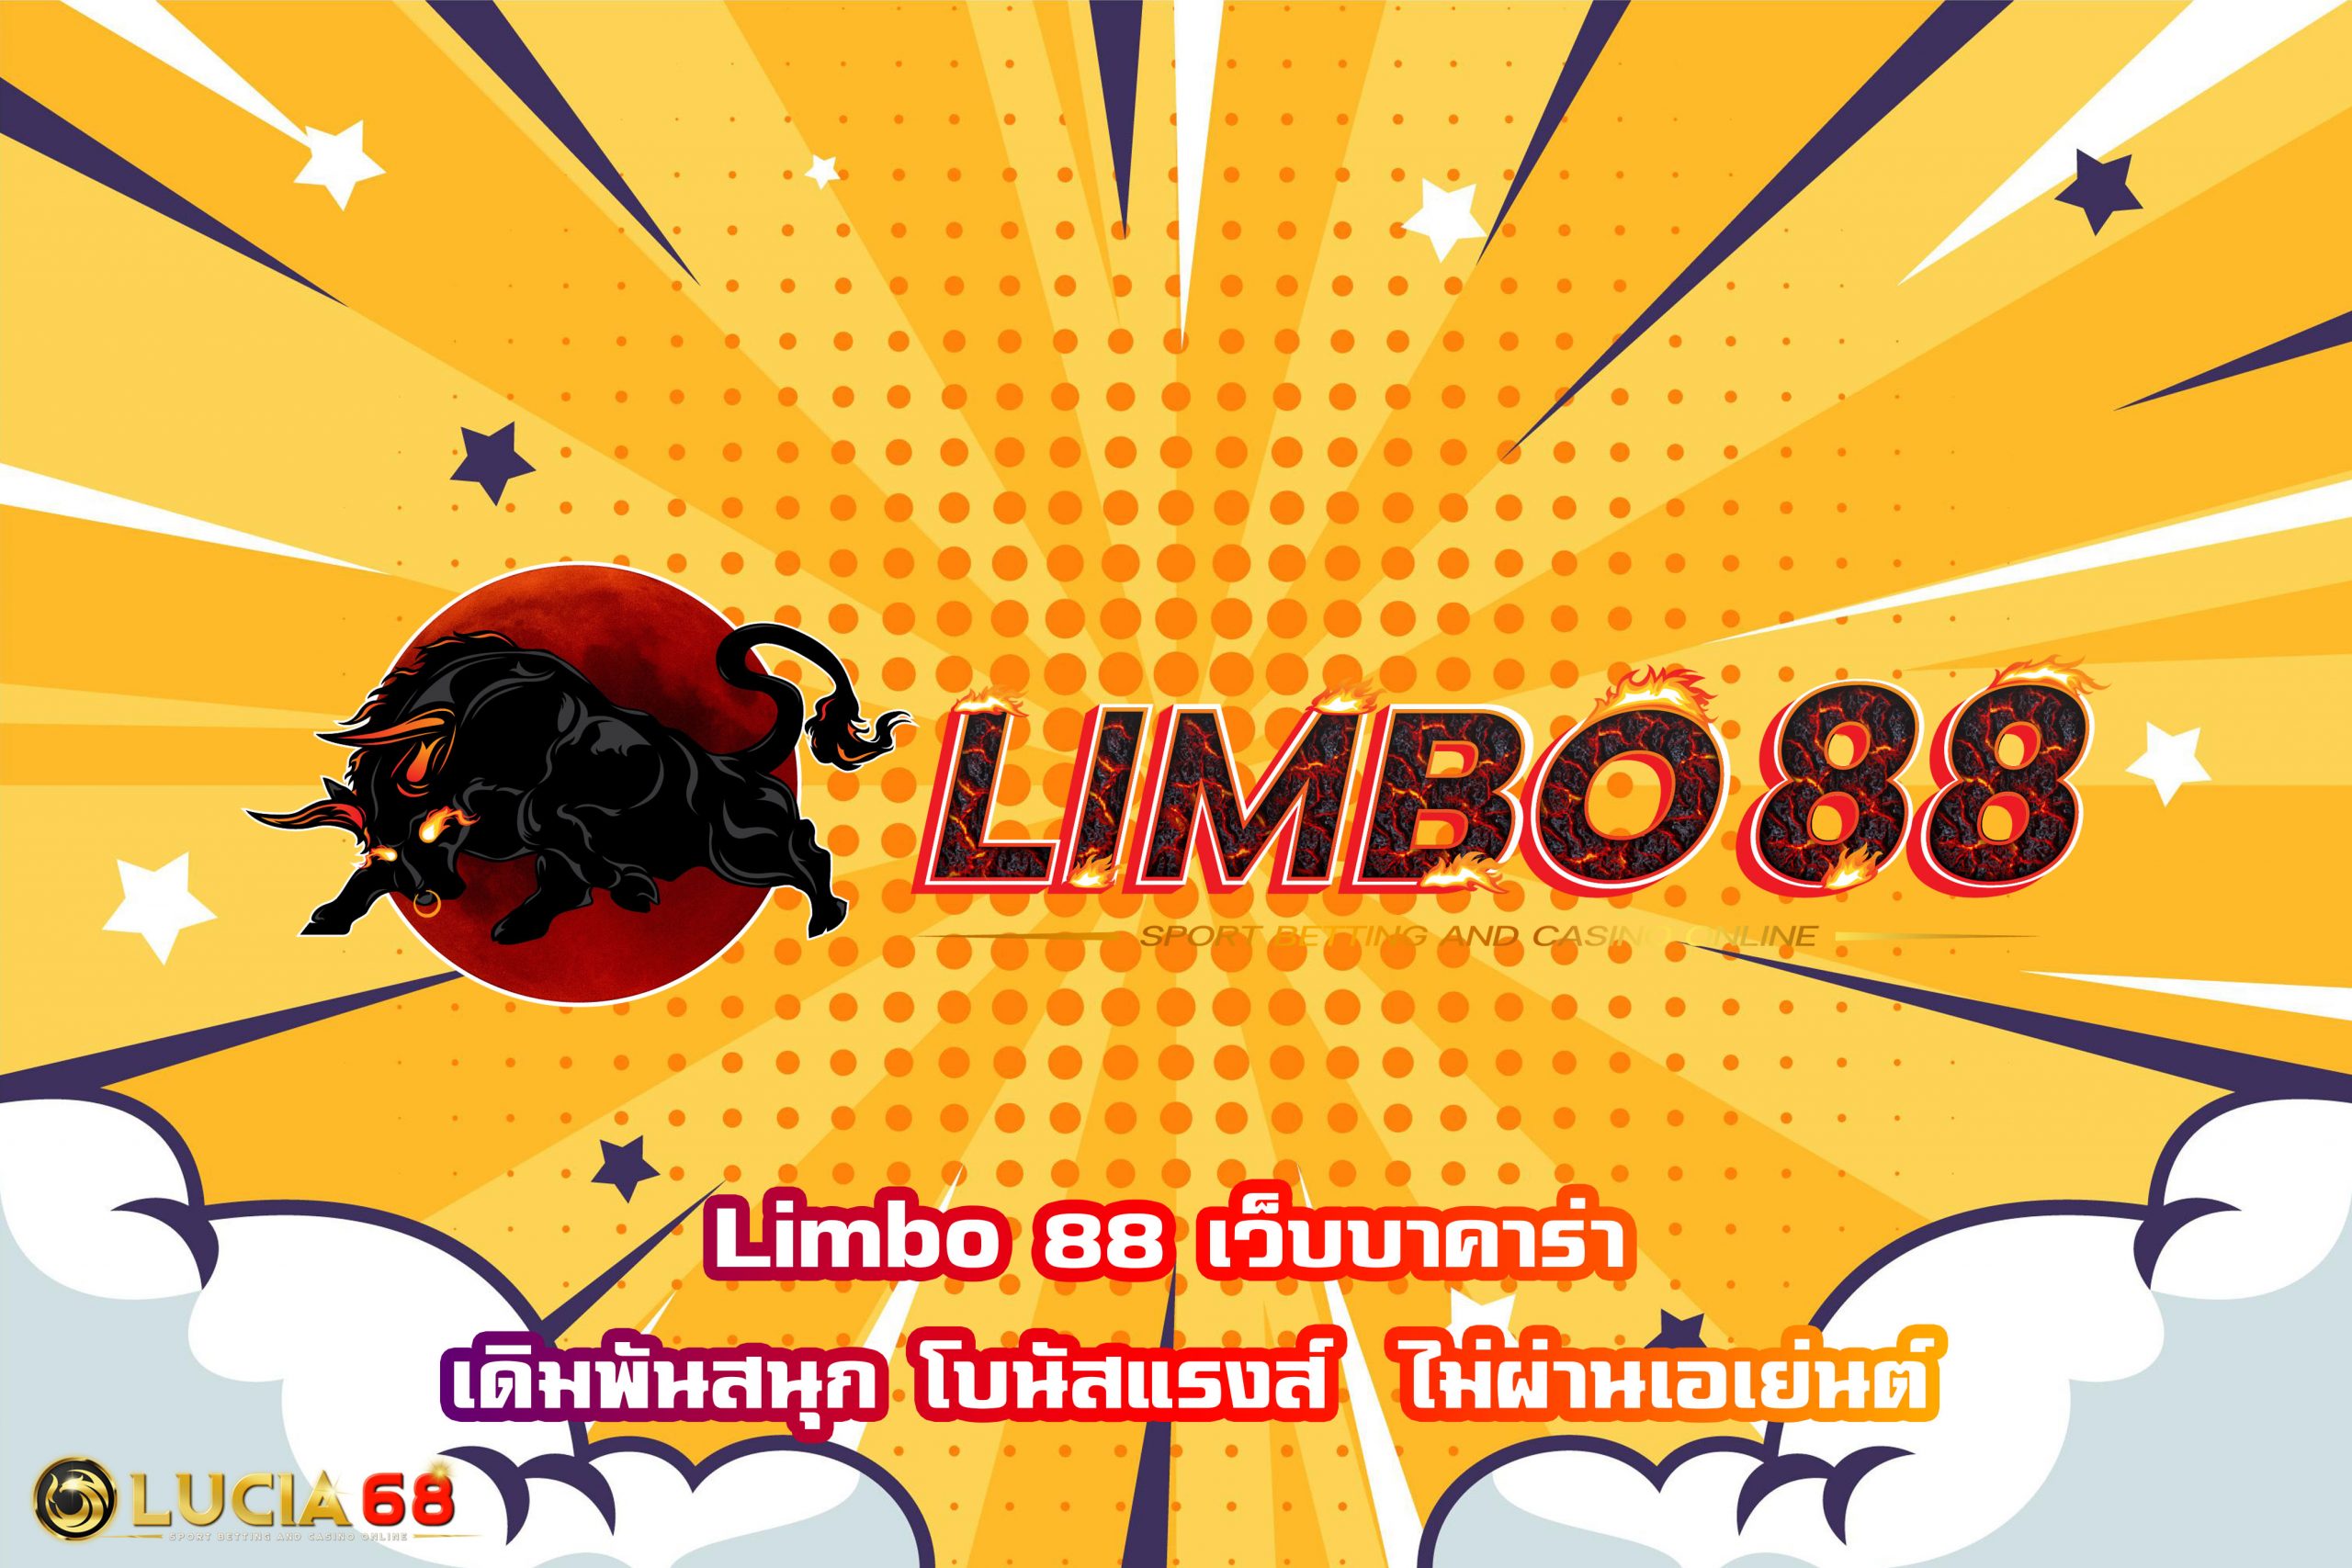 Limbo 88 เว็บบาคาร่า เดิมพันสนุก โบนัสแรงส์  ไม่ผ่านเอเย่นต์